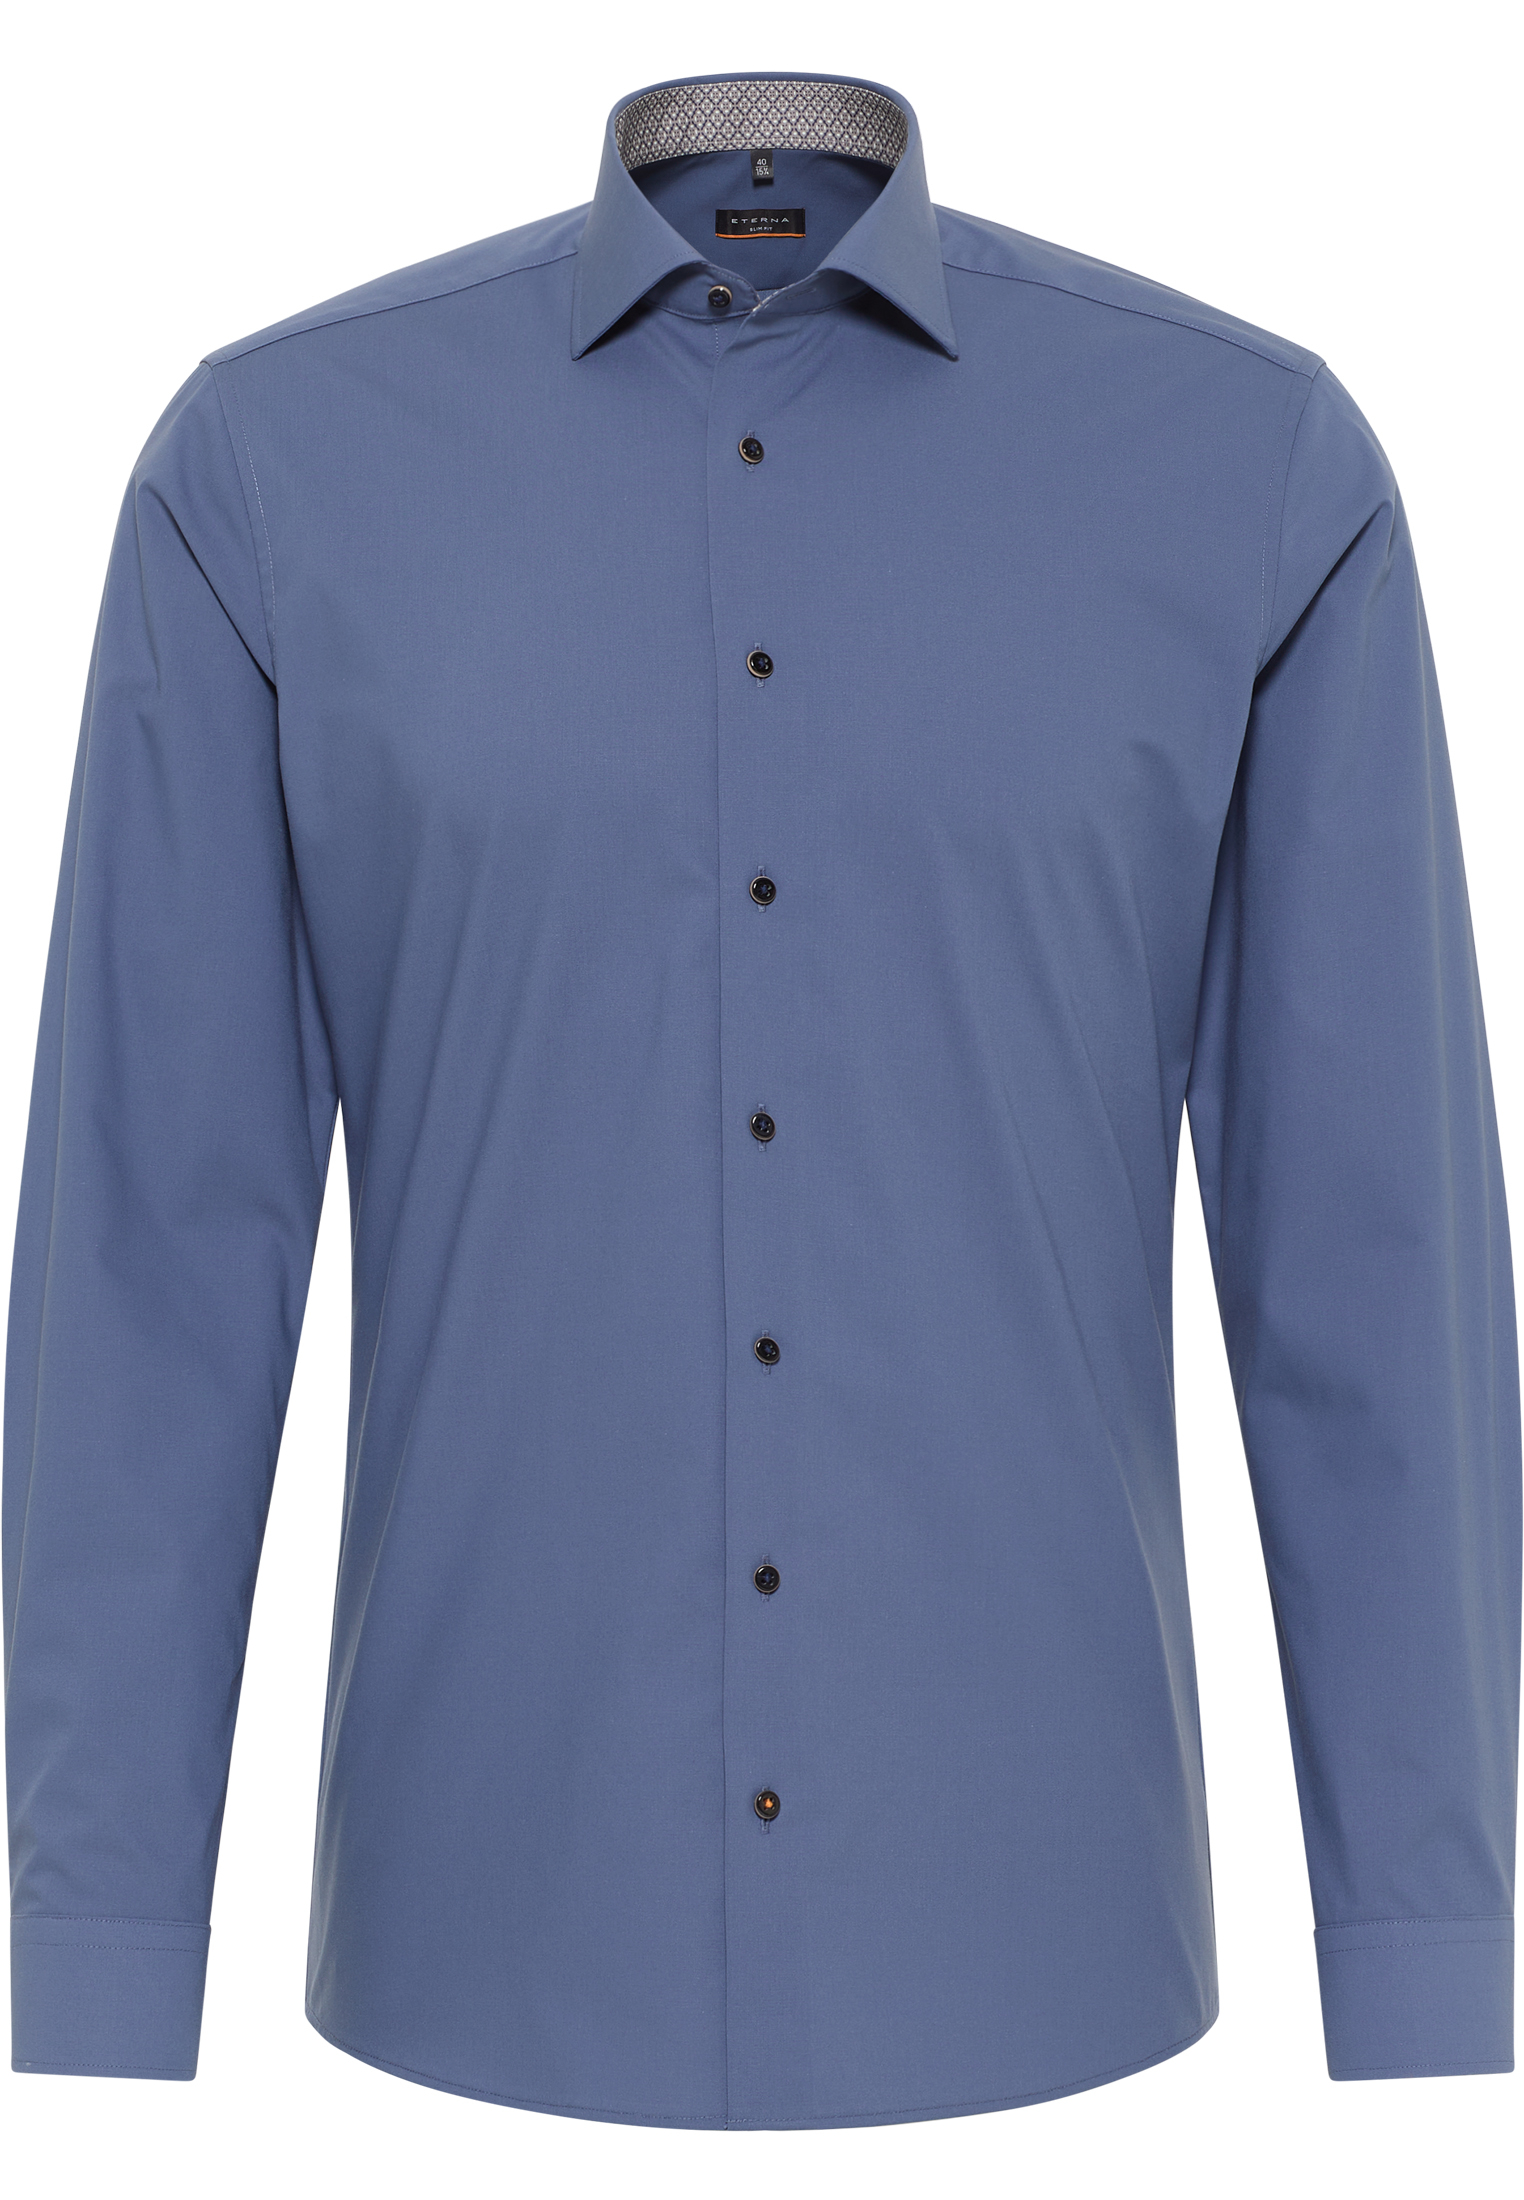 SLIM FIT Original Shirt in smoke blue plain